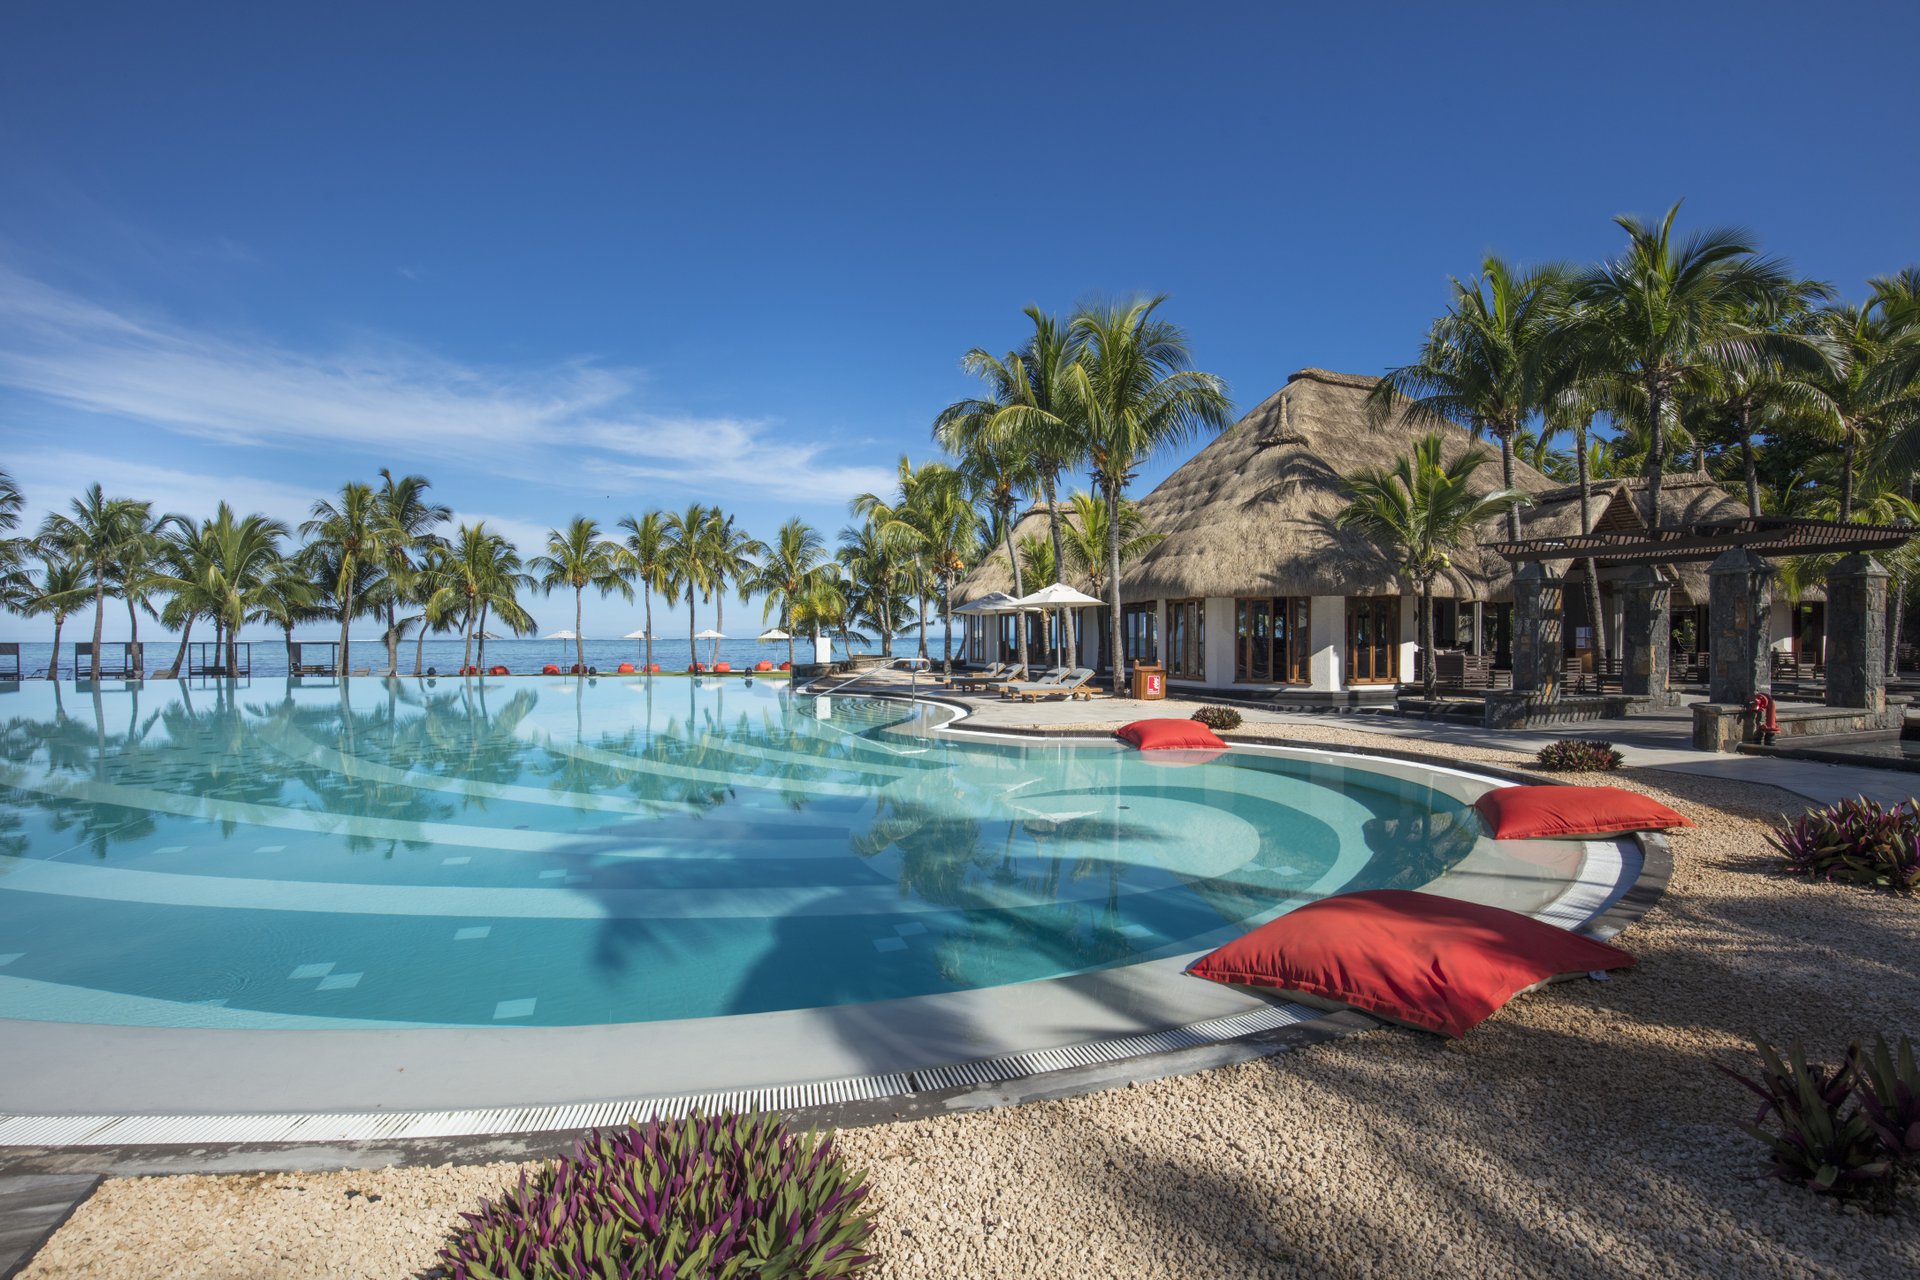 Привілейований доступ до всіх зручностей готелю Paradis Beachcomber.